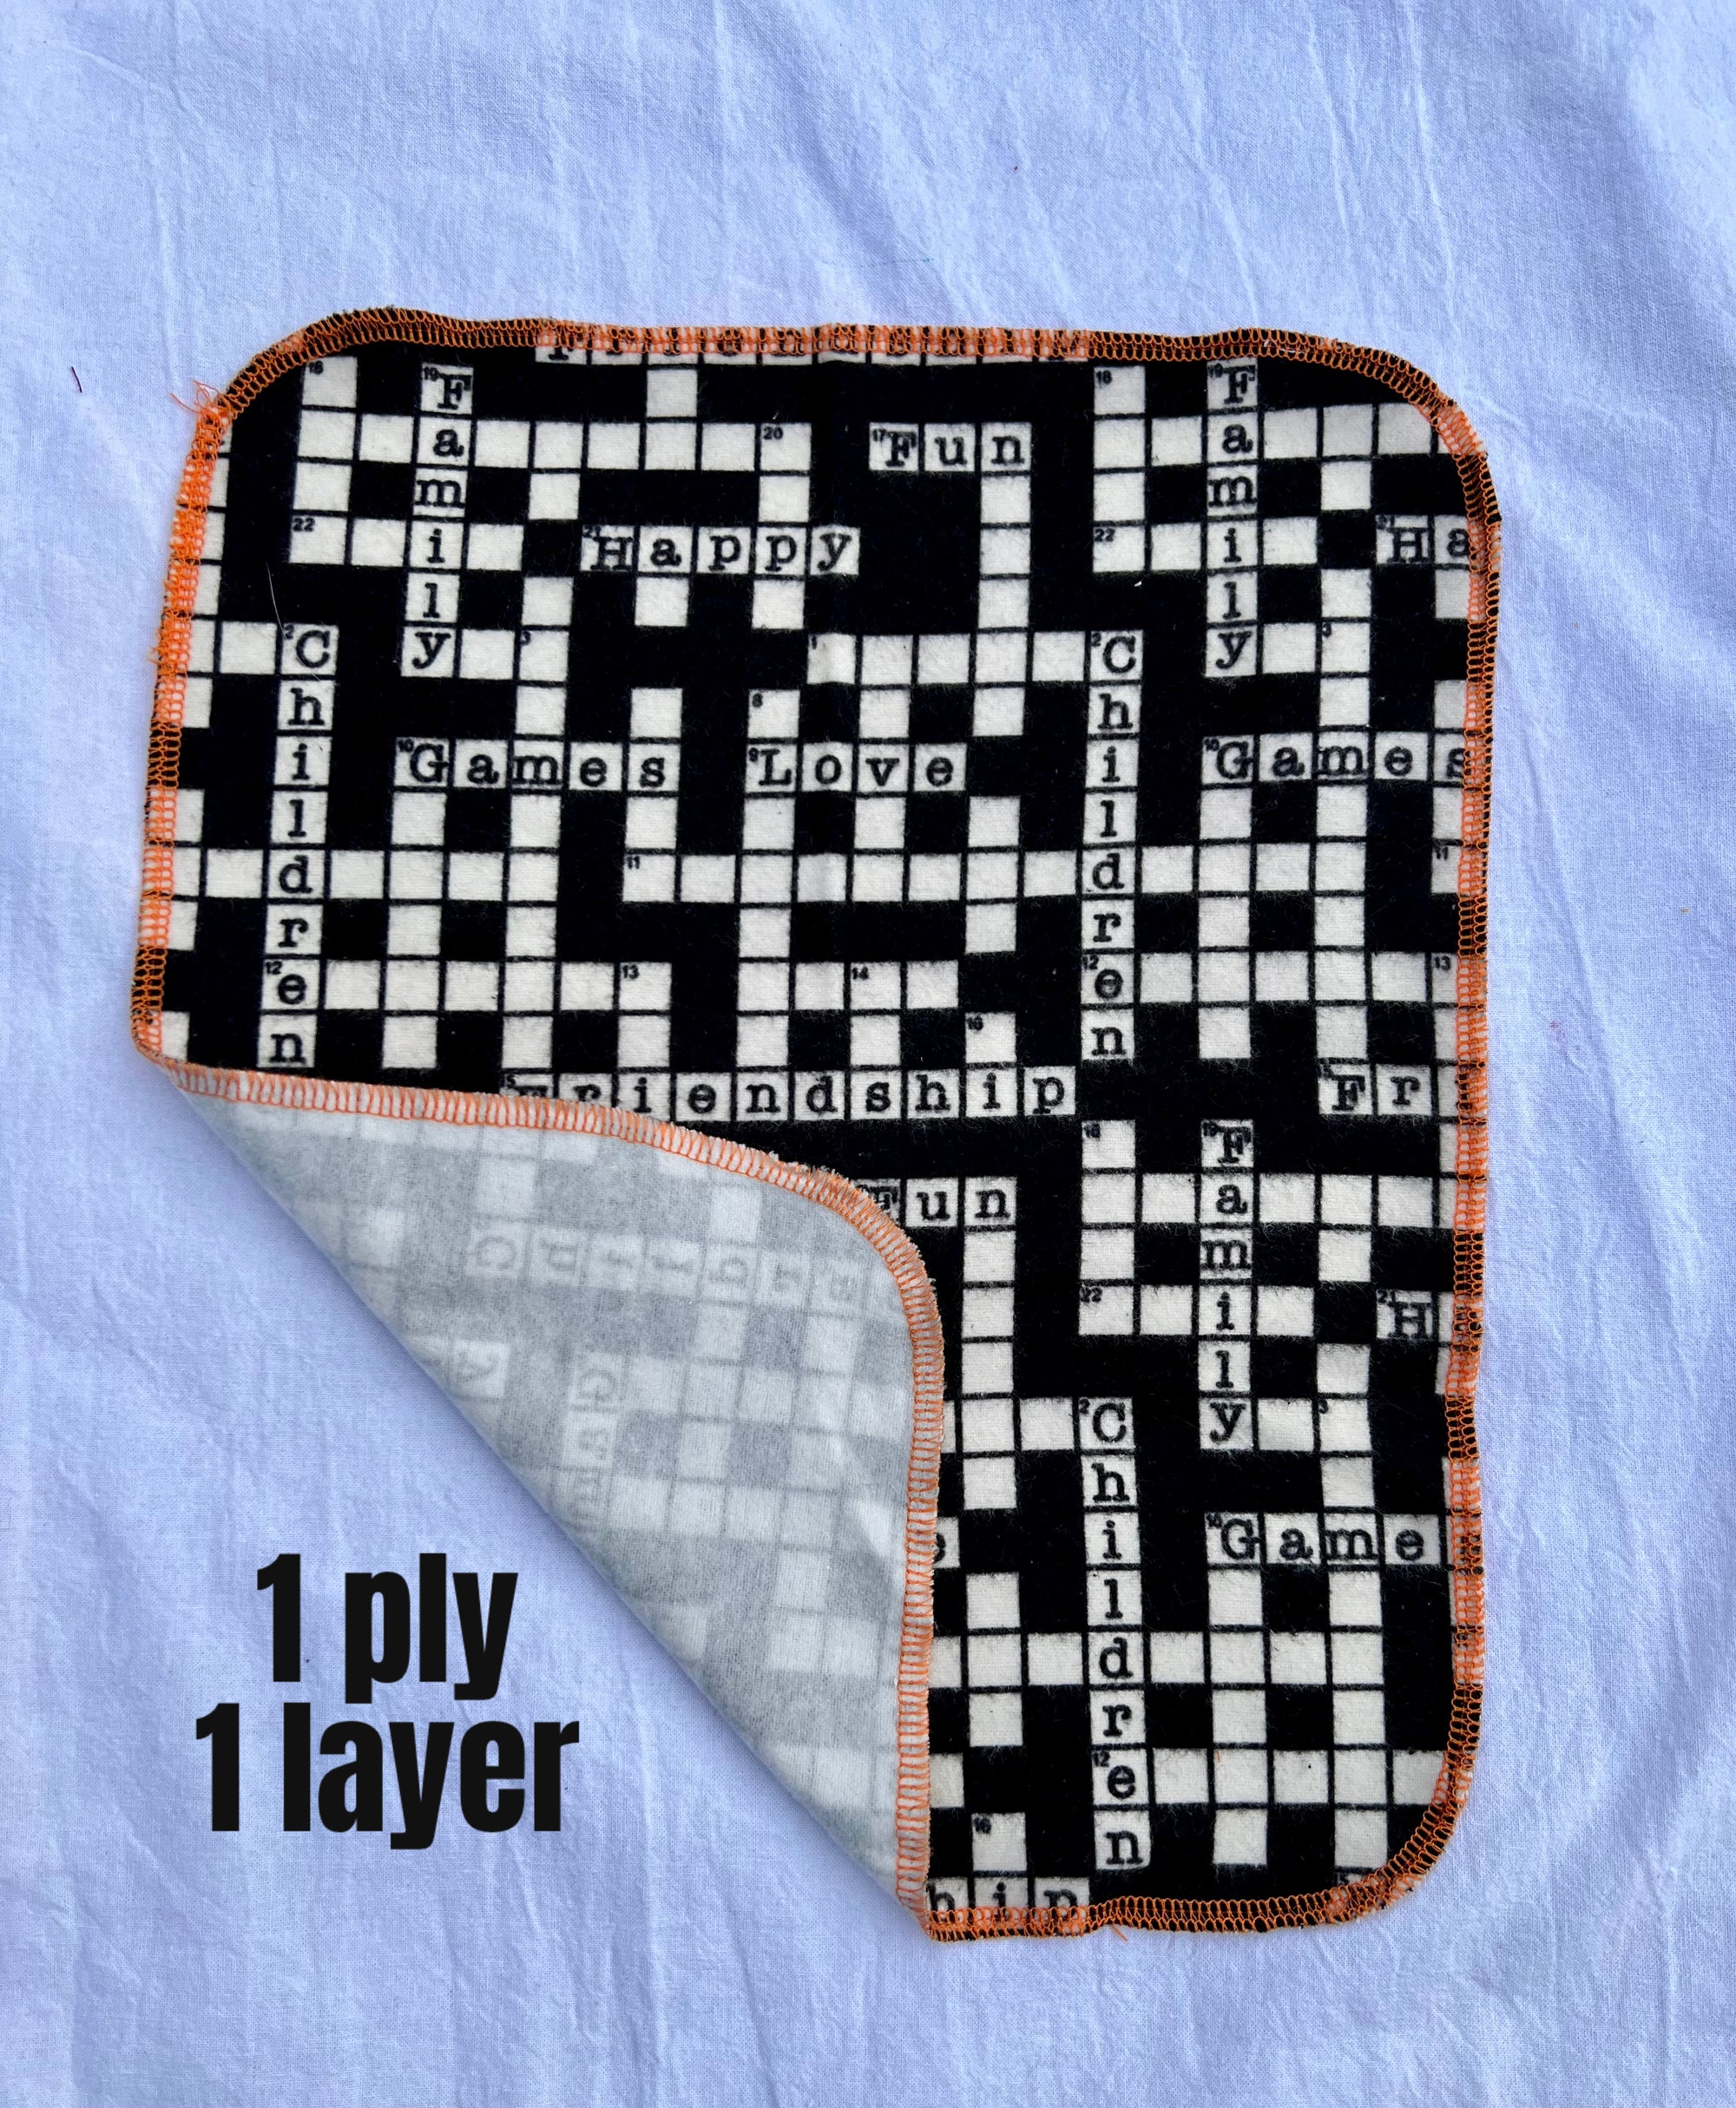 Non Paper Towels crossword puzzle- Large 10x12